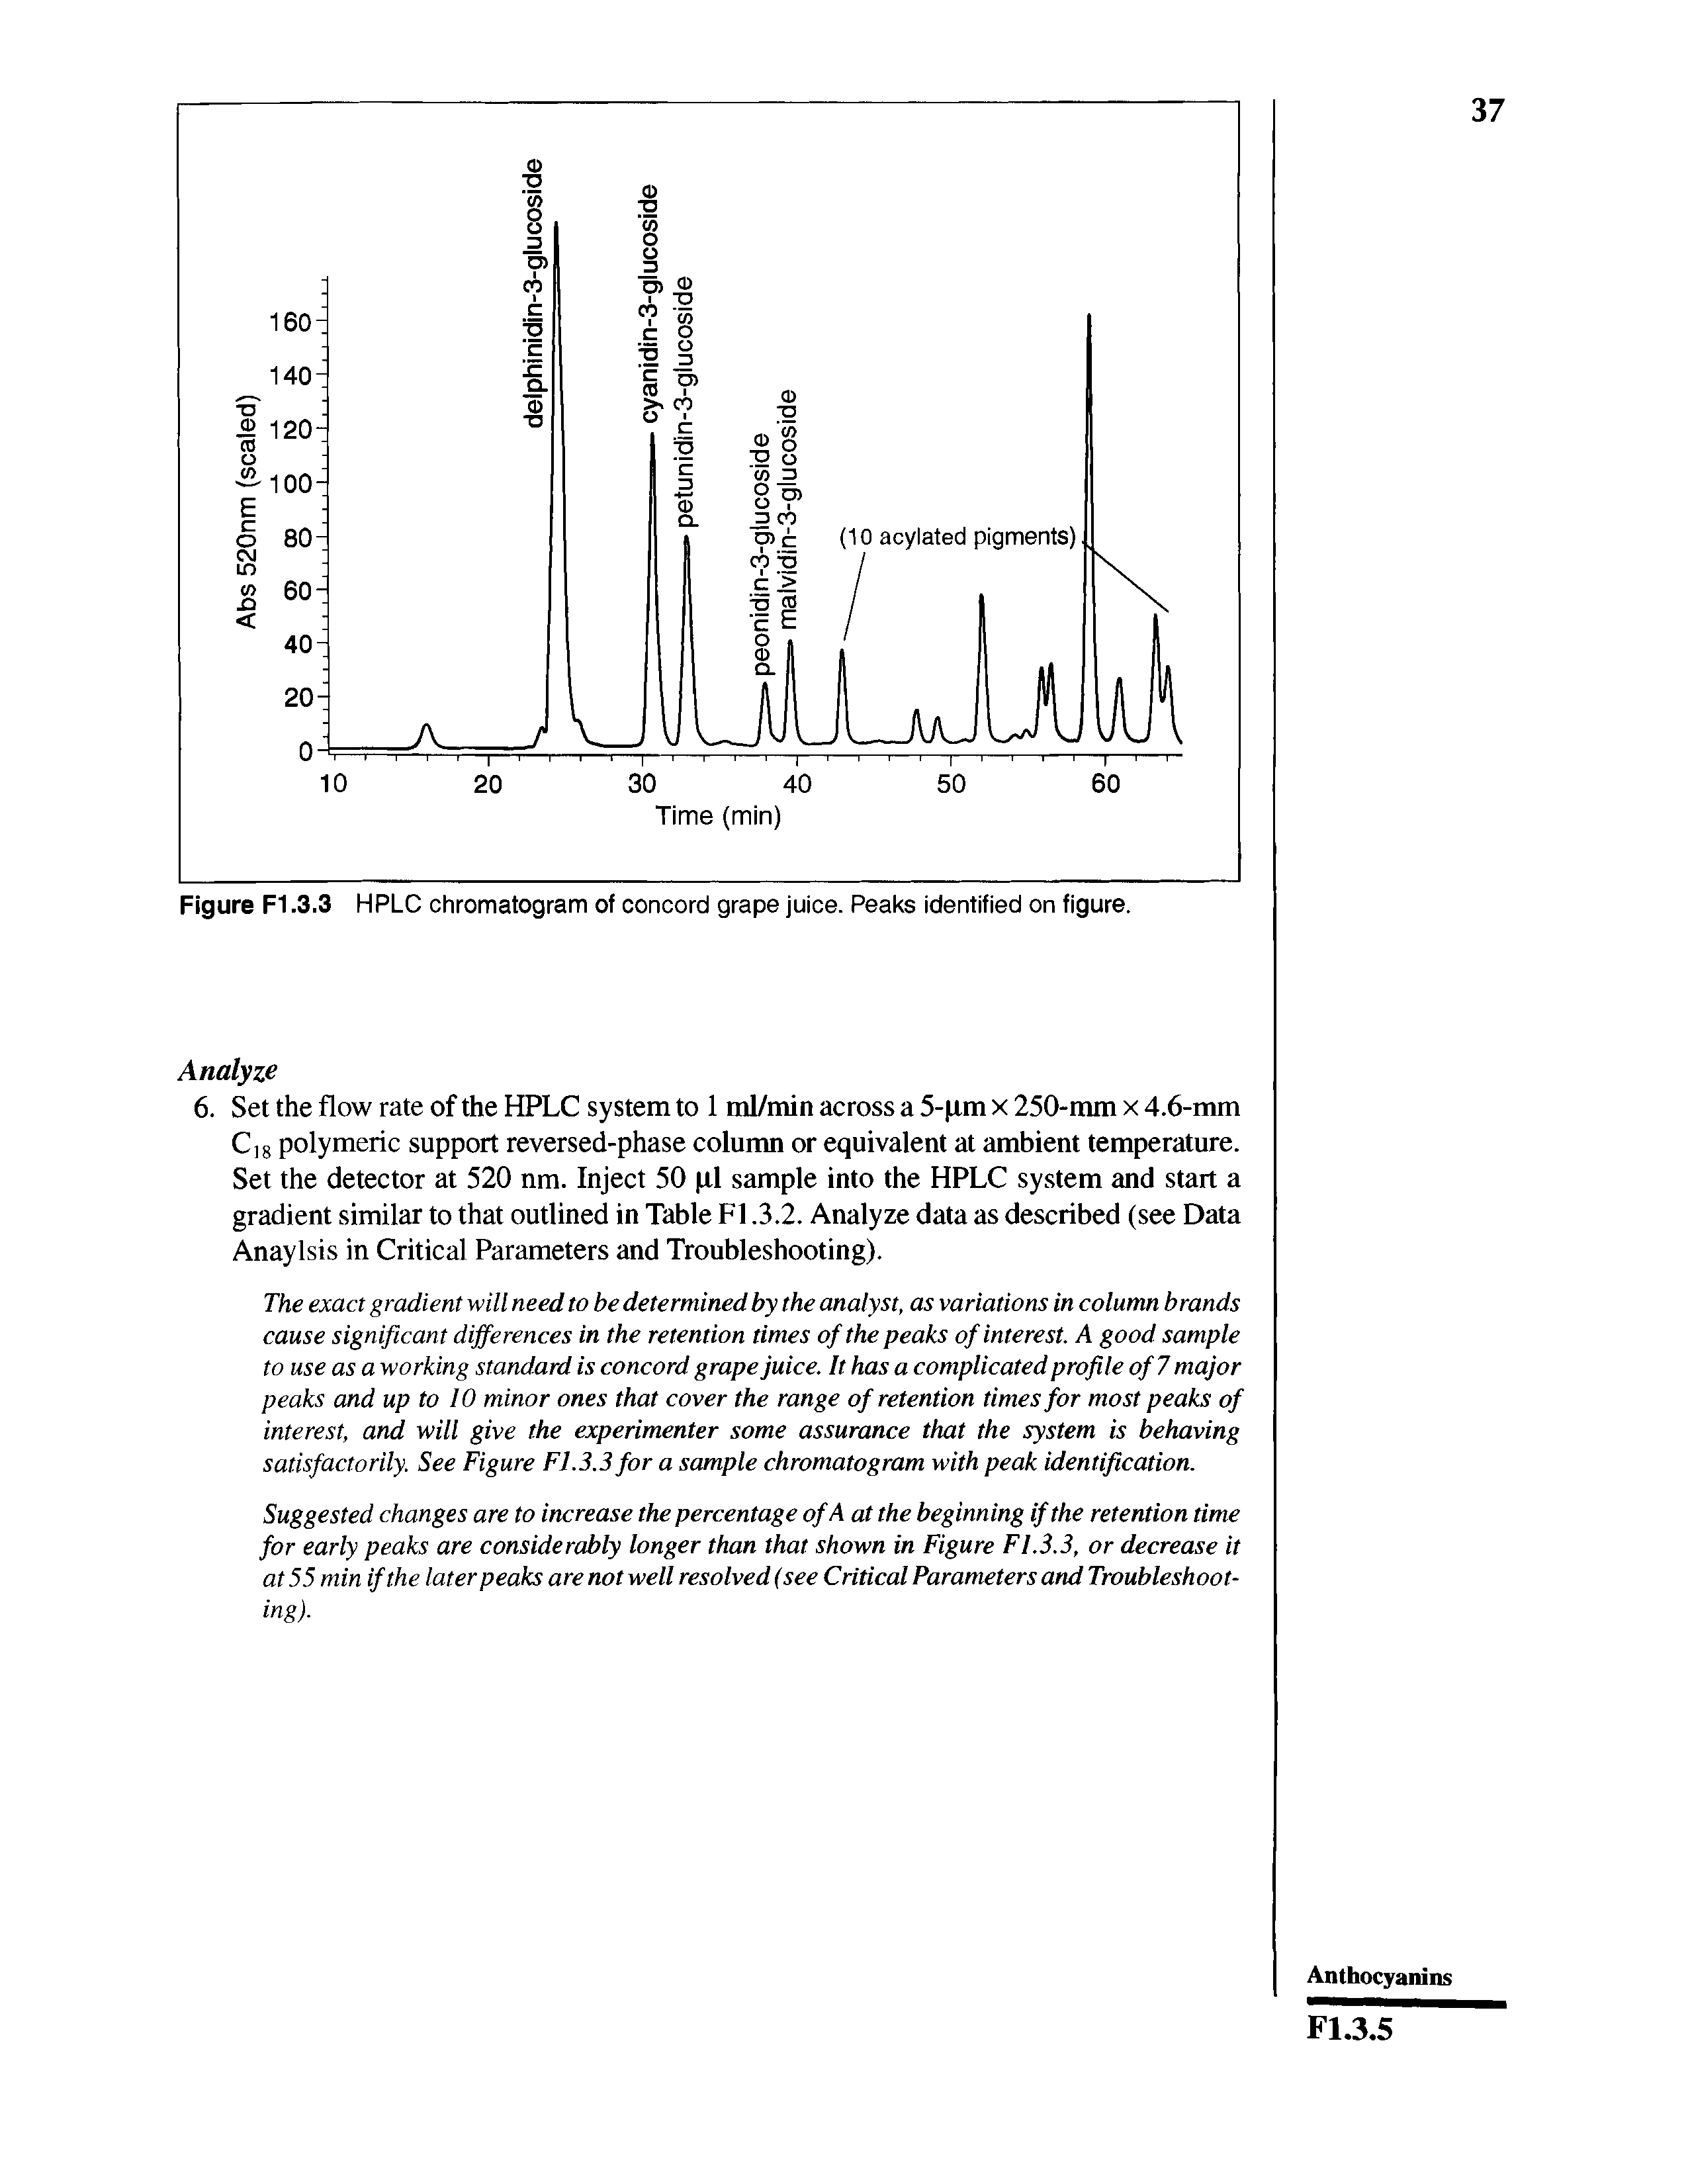 Figure F1.3.3 HPLC chromatogram of concord grape juice. Peaks identified on figure.